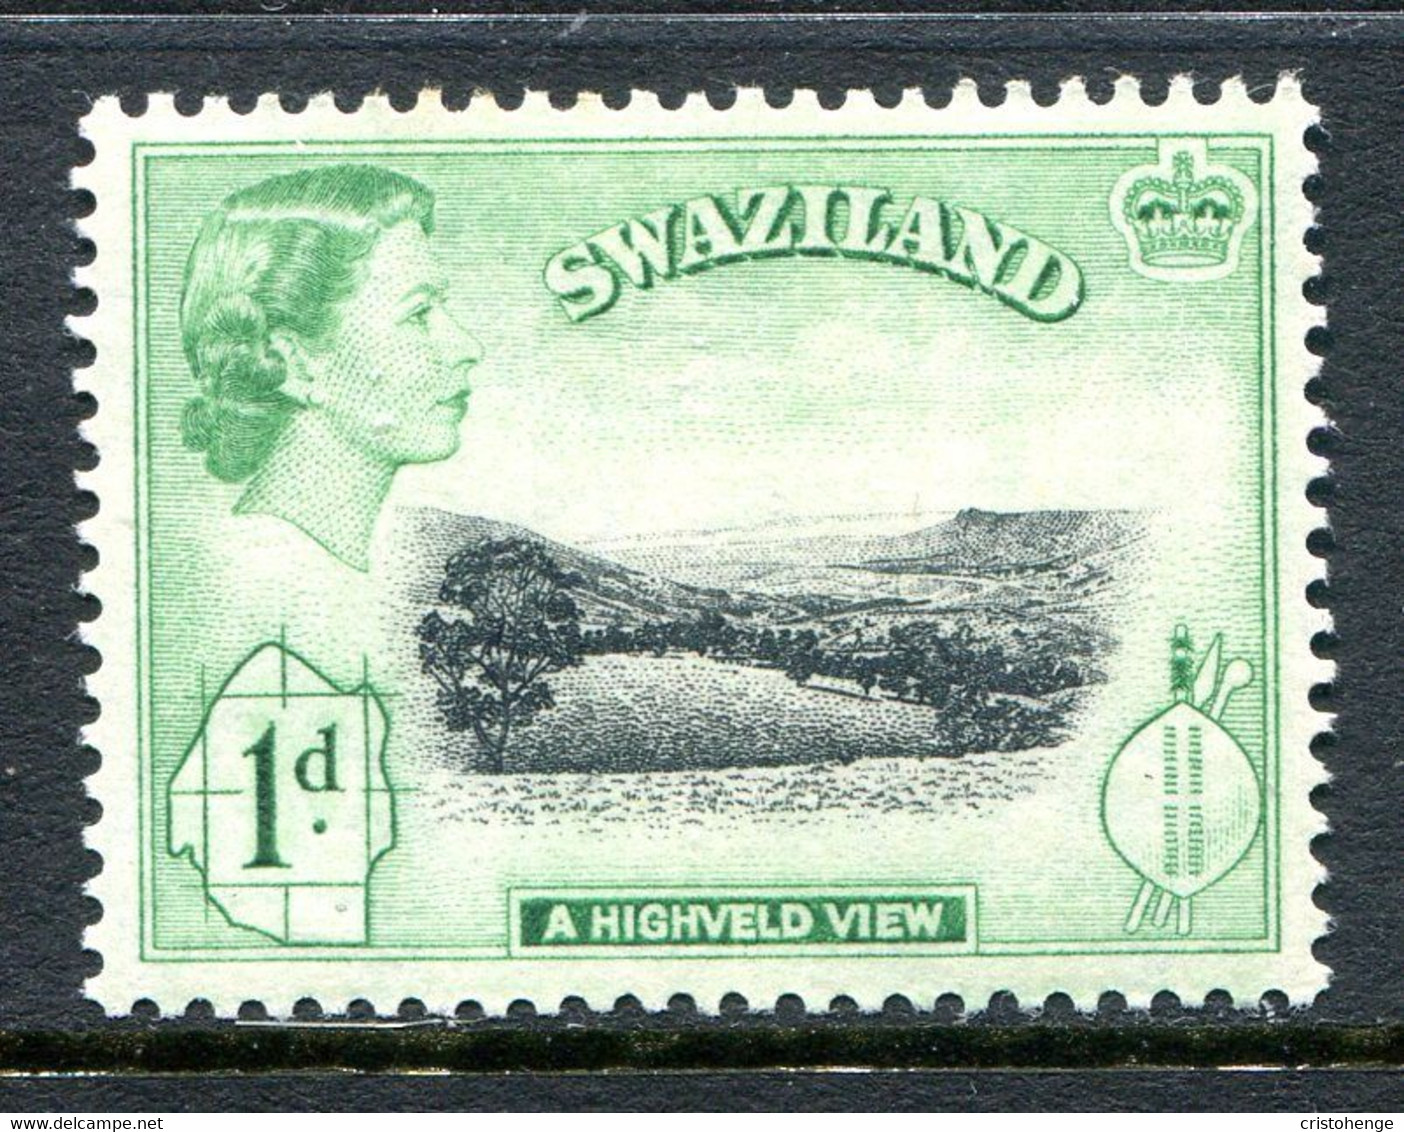 Swaziland 1956 Pictorials - 1d A Highland View LHM (SG 54) - Swaziland (...-1967)